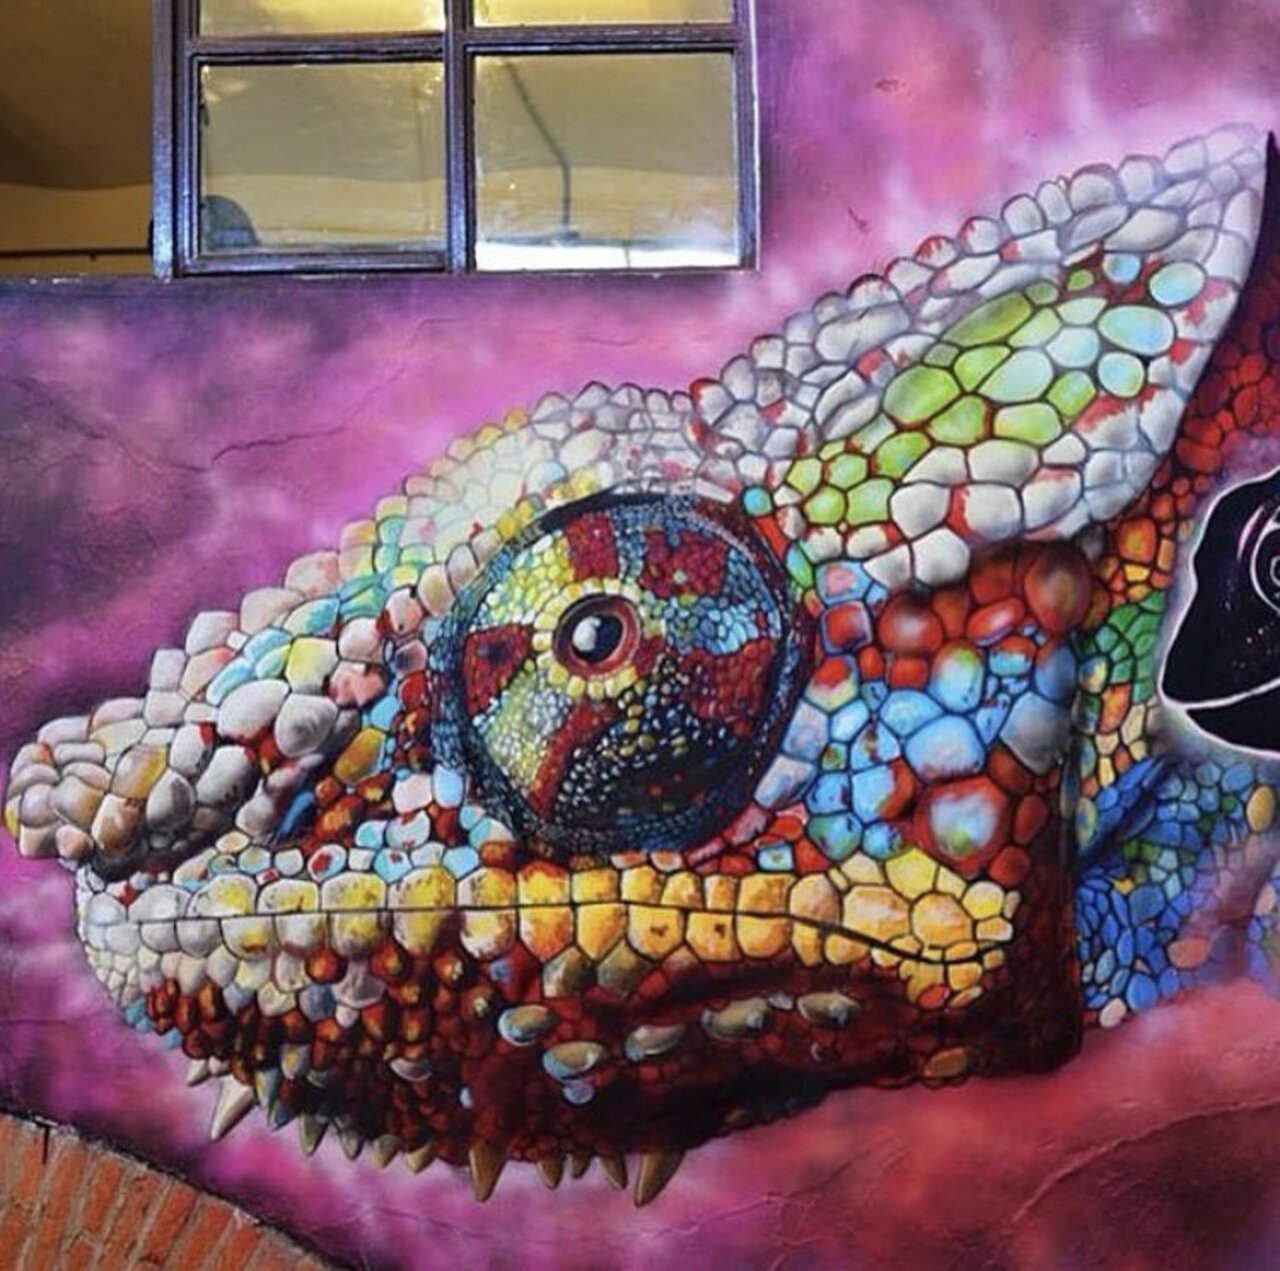 New work by ChungaSF in Aguascalientes, MX #streetart #mural #graffiti #art https://t.co/2XTLGyOQAu